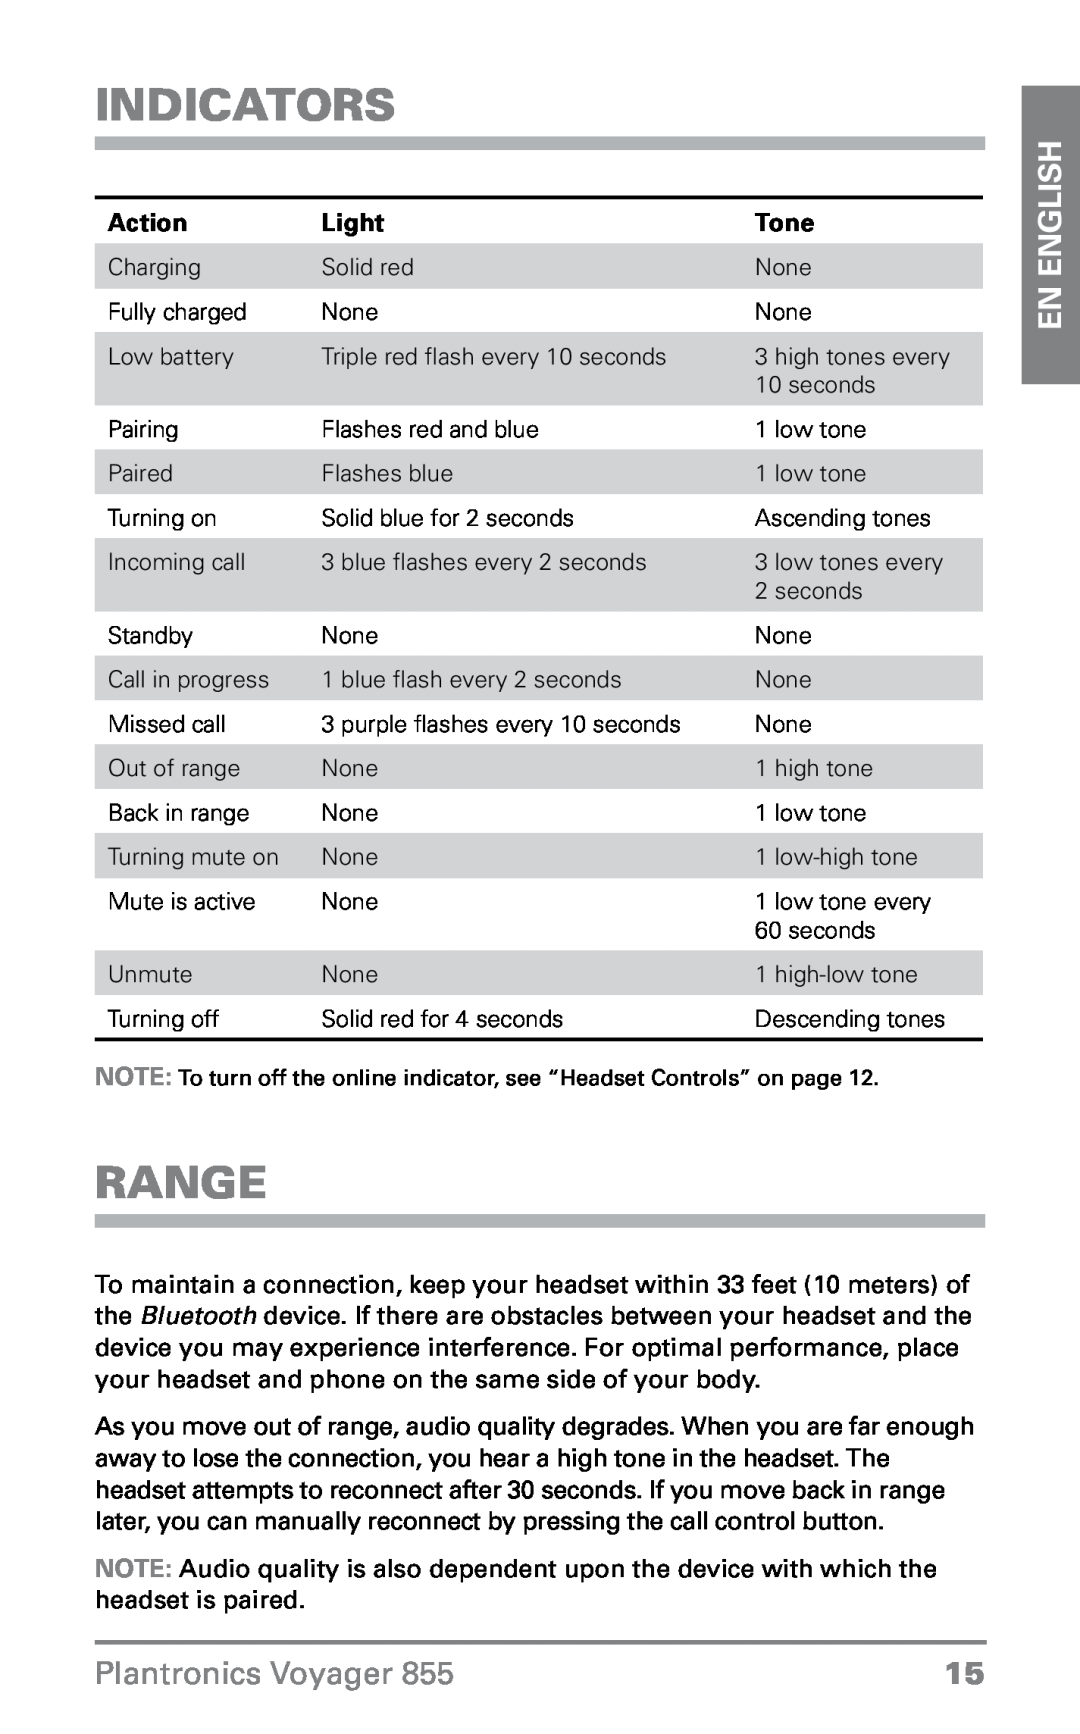 Plantronics VOYAGER855 manual Indicators, Range, En English, Plantronics Voyager, Action, Light, Tone 